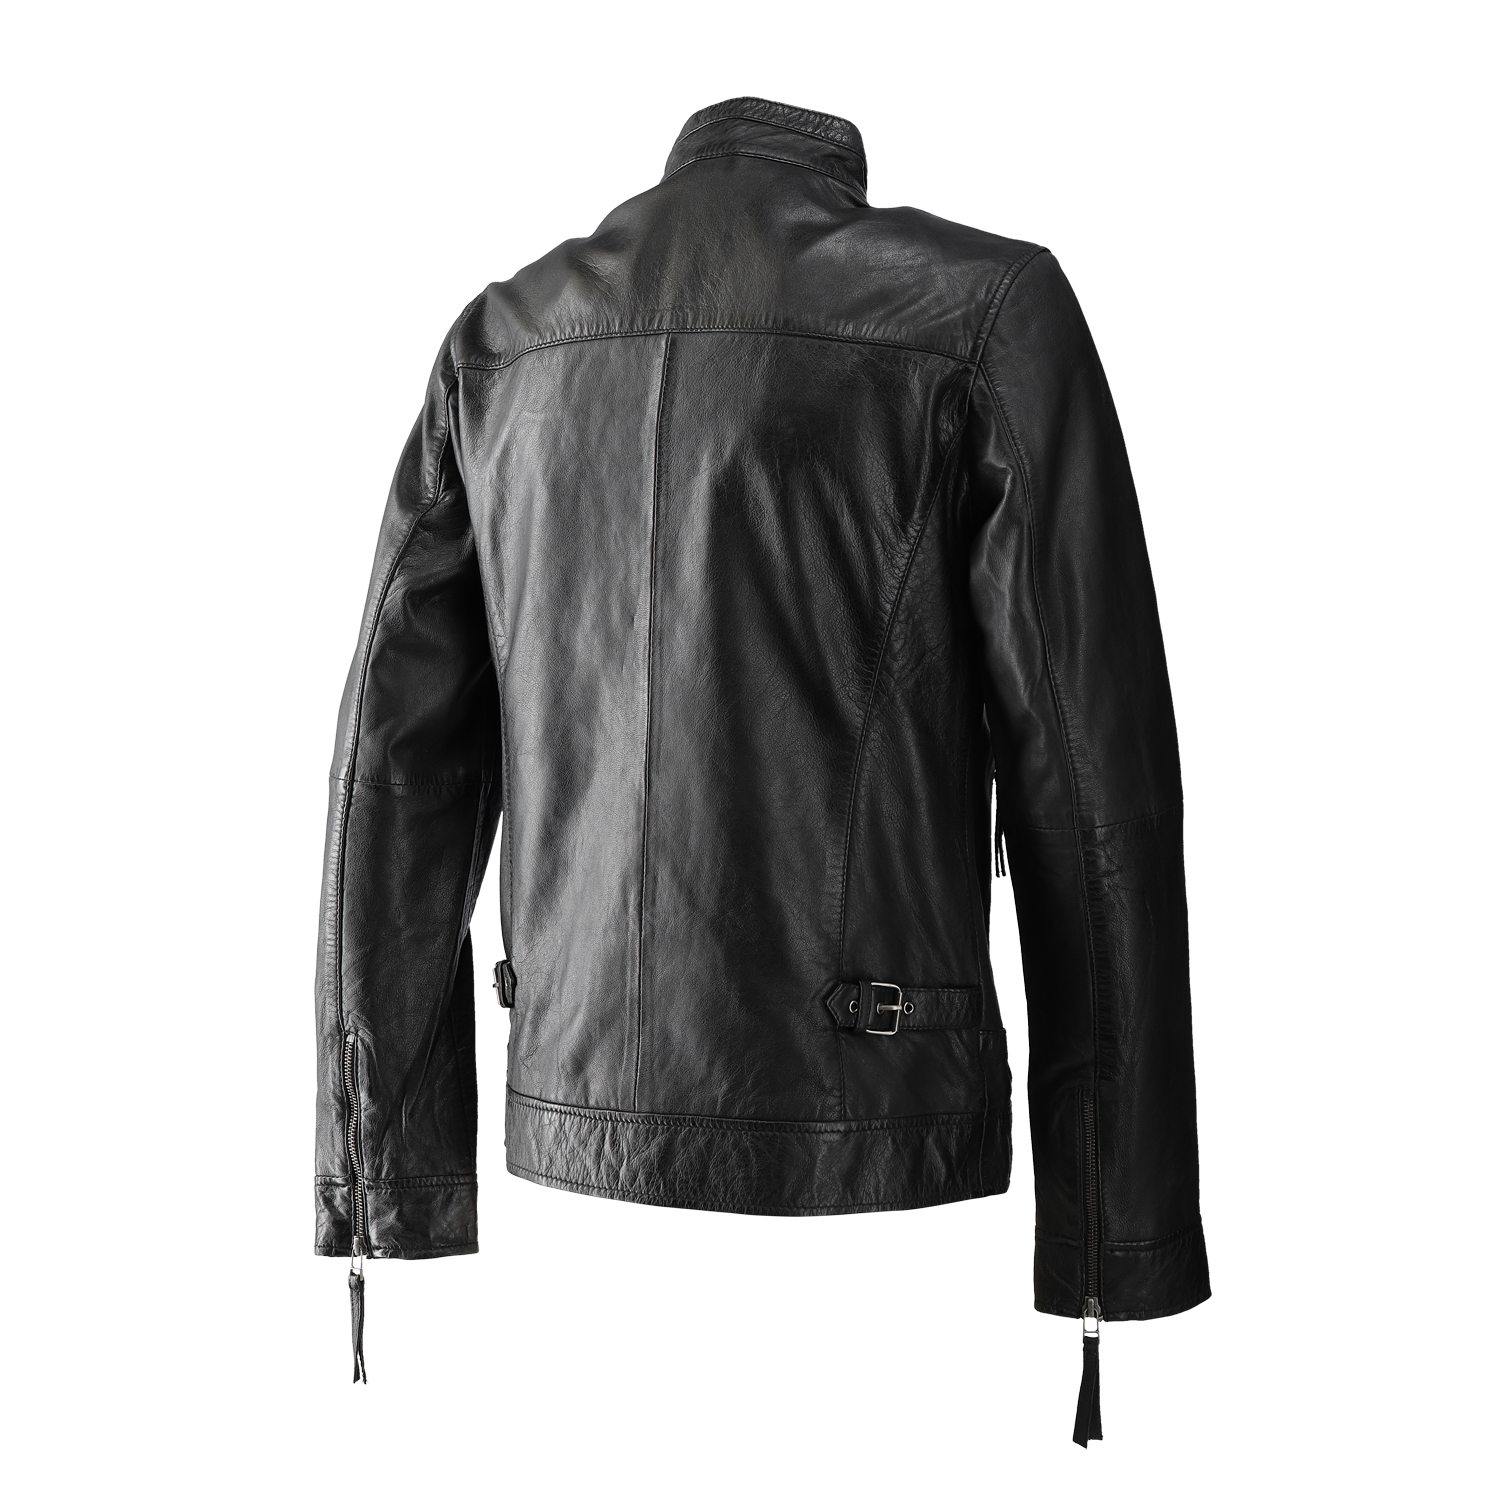 RIDEZ CLUBS JACKET LampBlack RLJ202 Leather Jacket